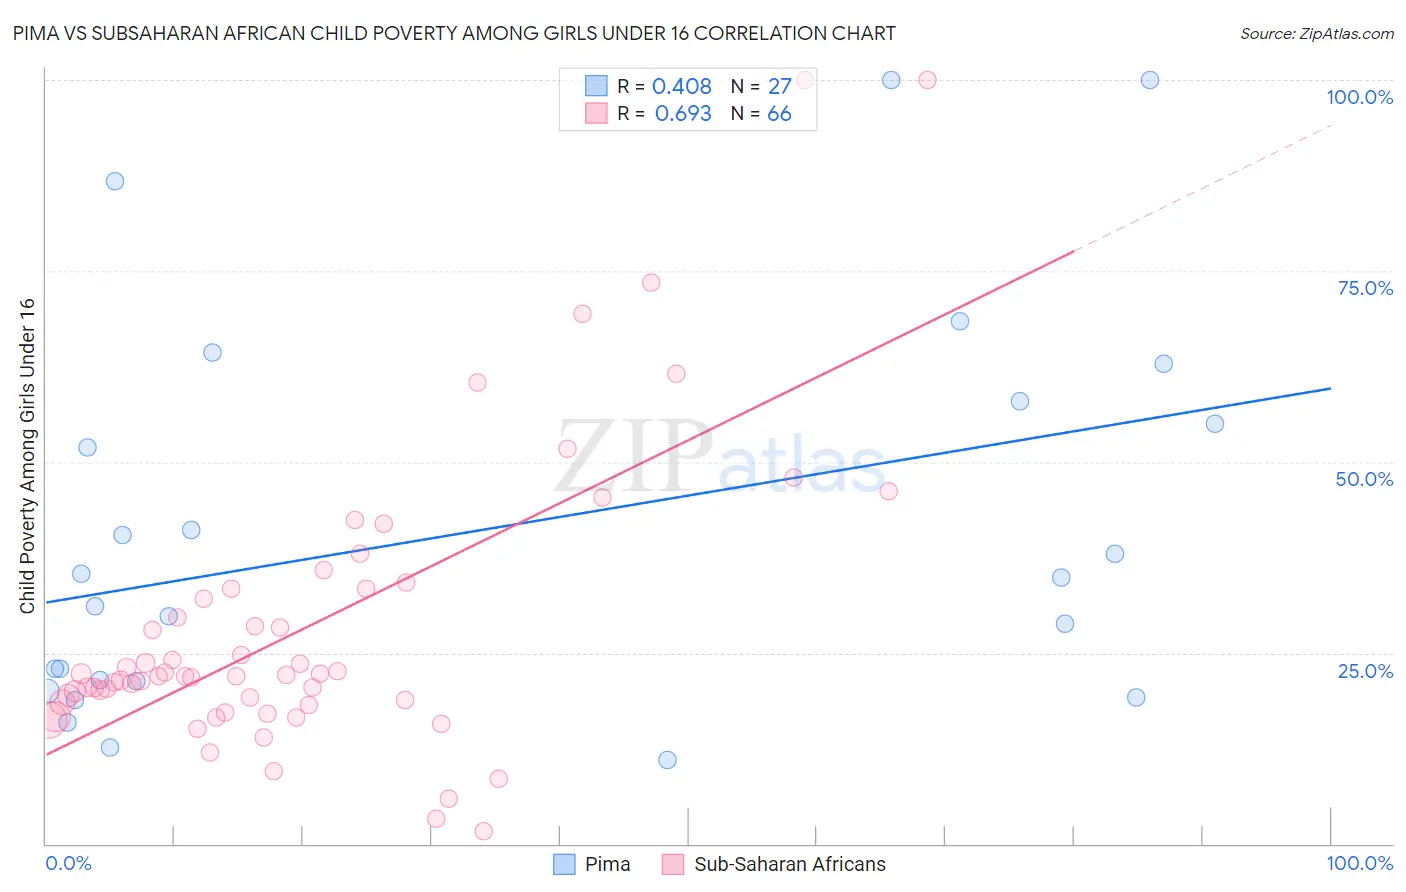 Pima vs Subsaharan African Child Poverty Among Girls Under 16